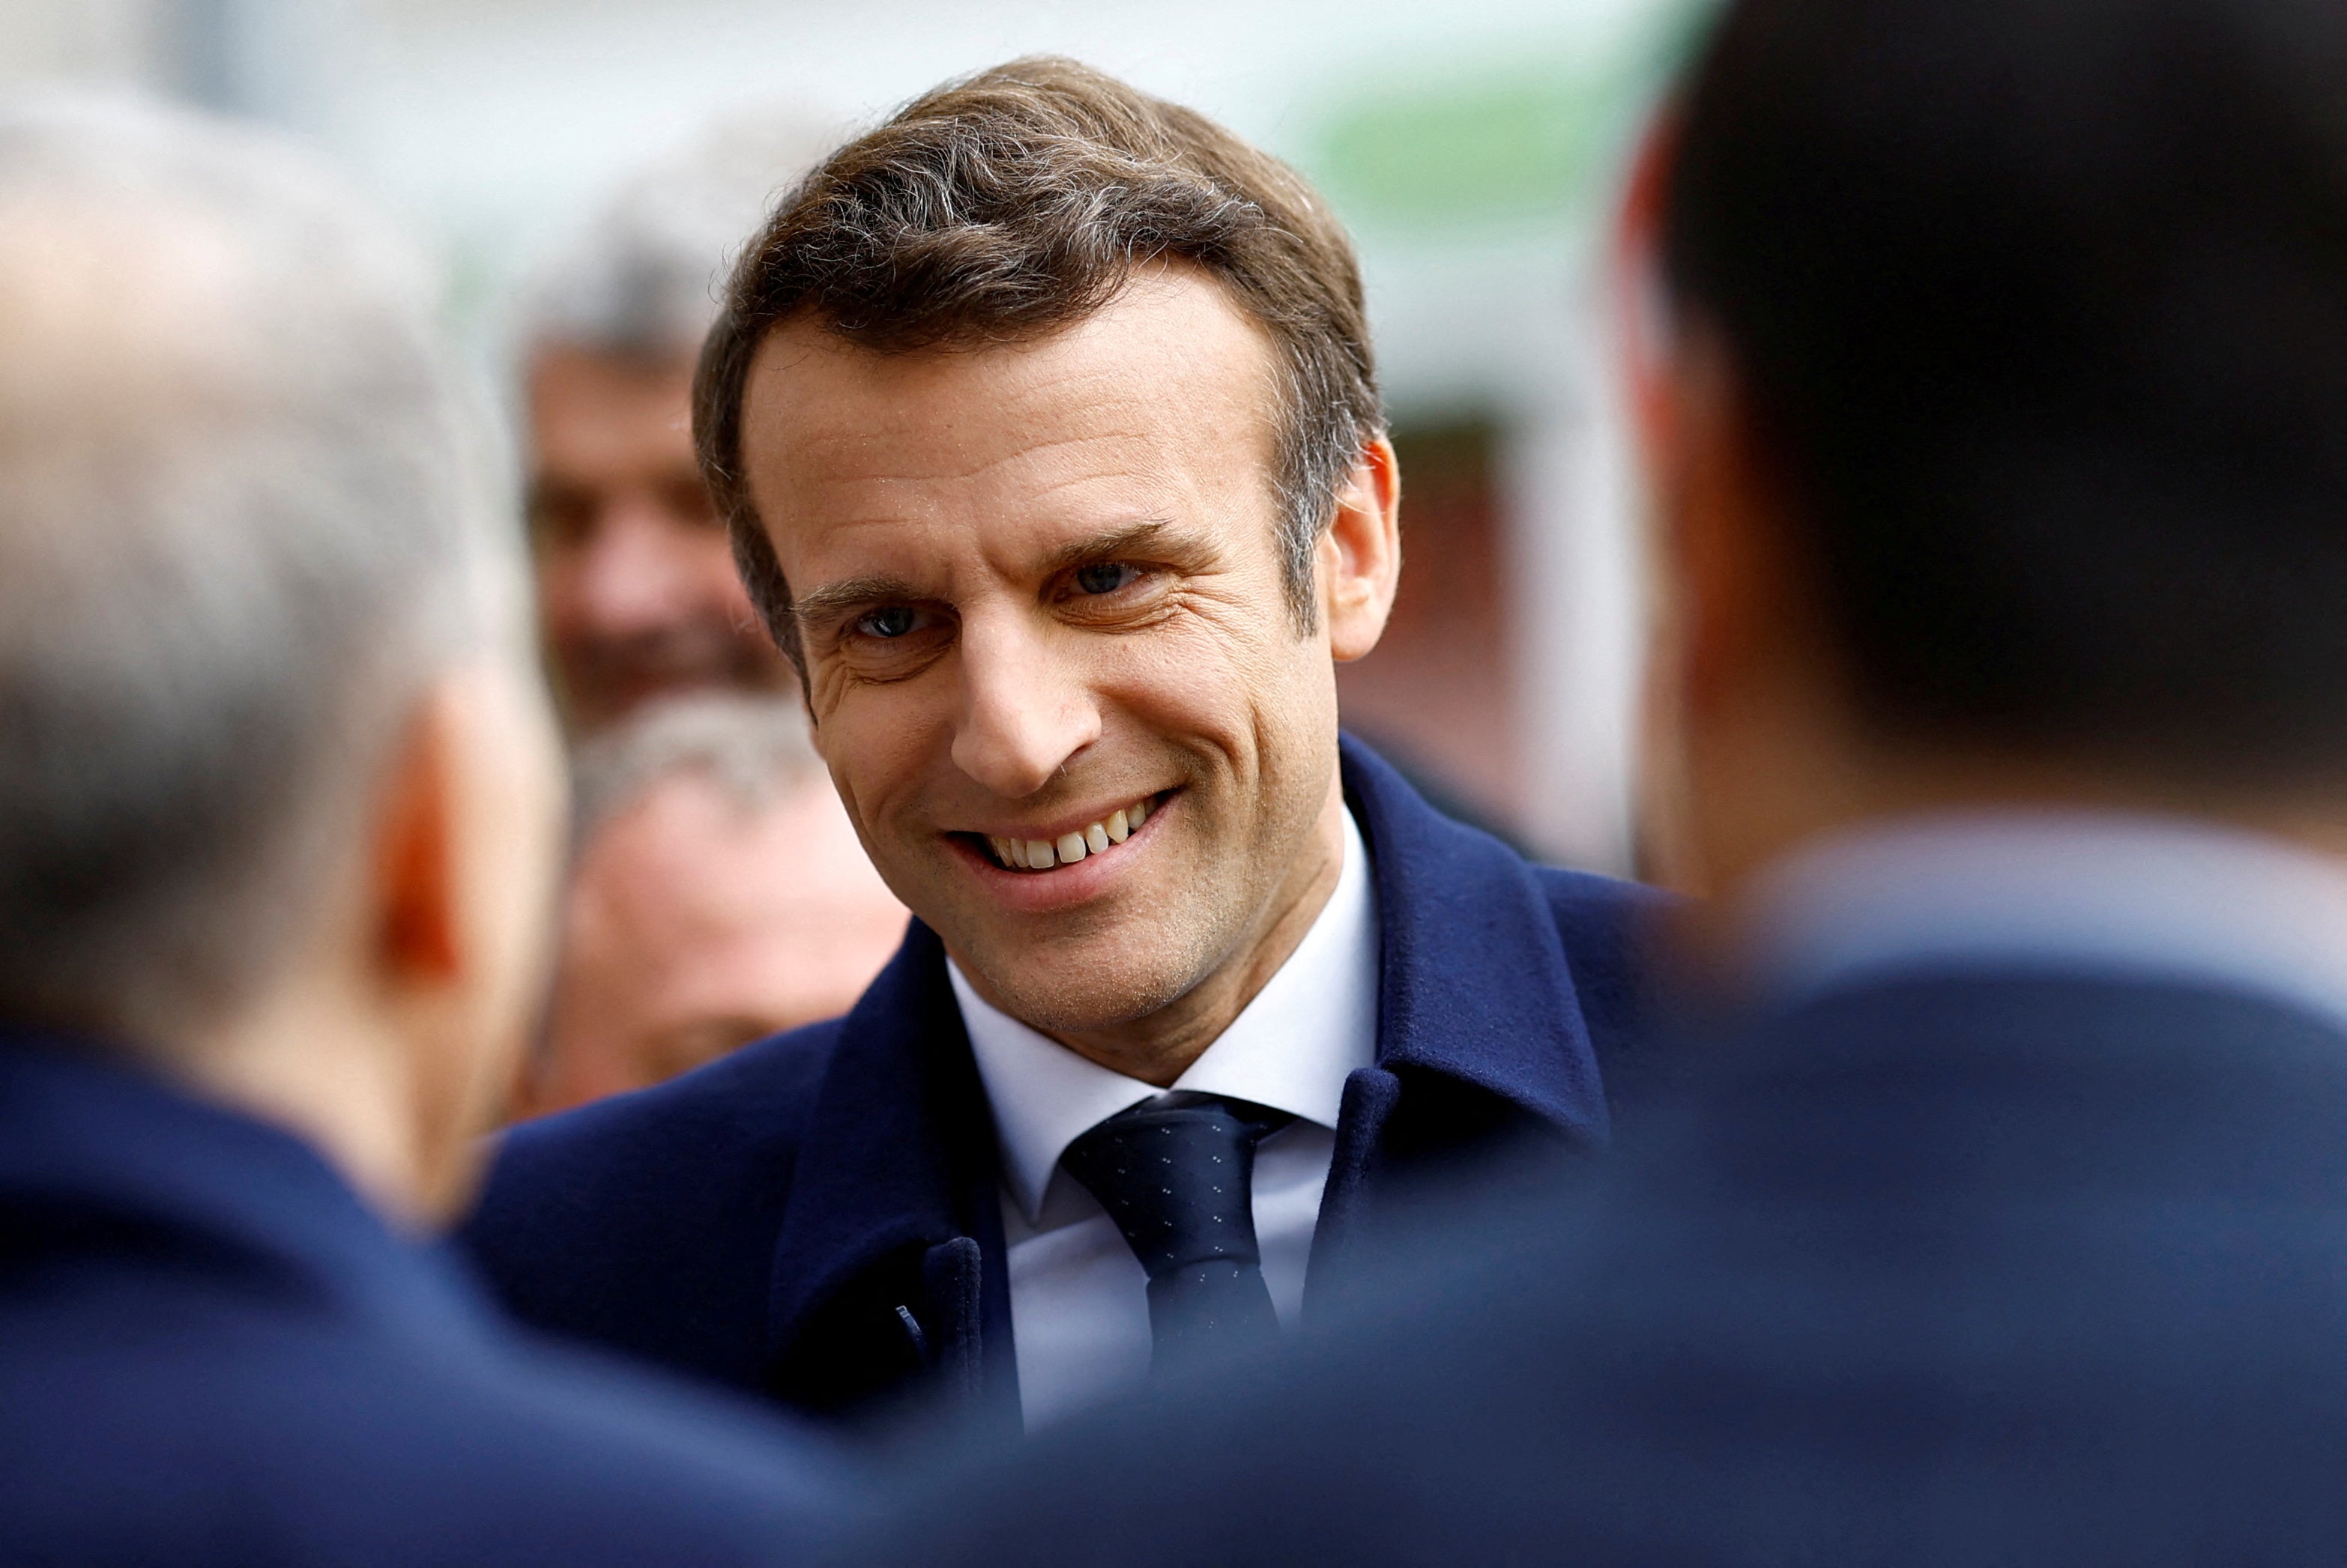 Macron represents something bigger than success in France’s idiosyncratic politics